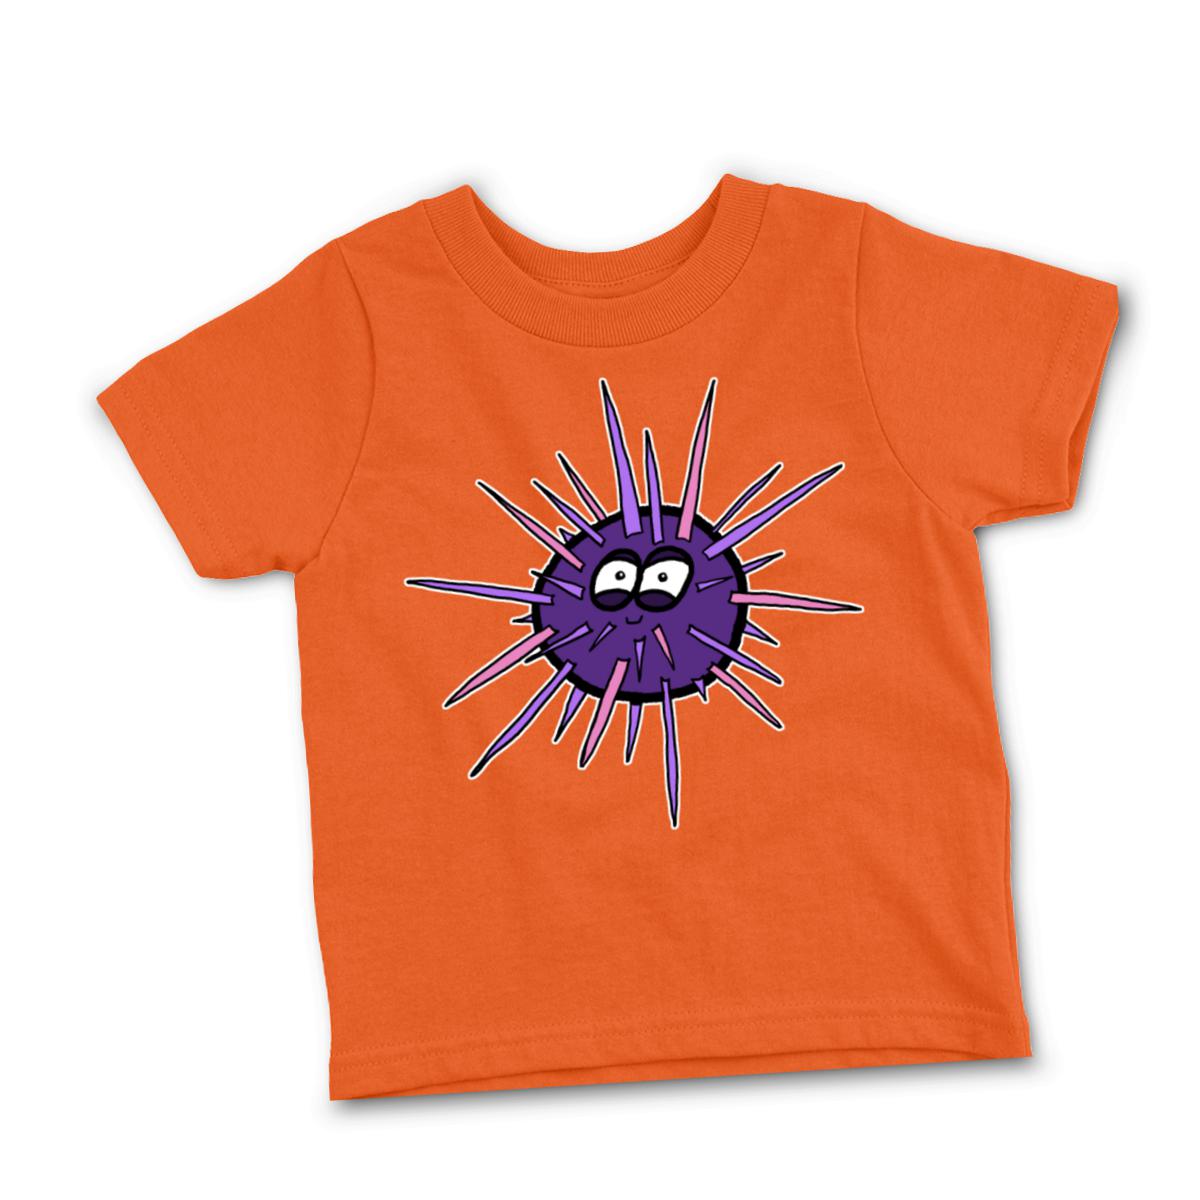 Sea Urchin Toddler Tee 2T orange